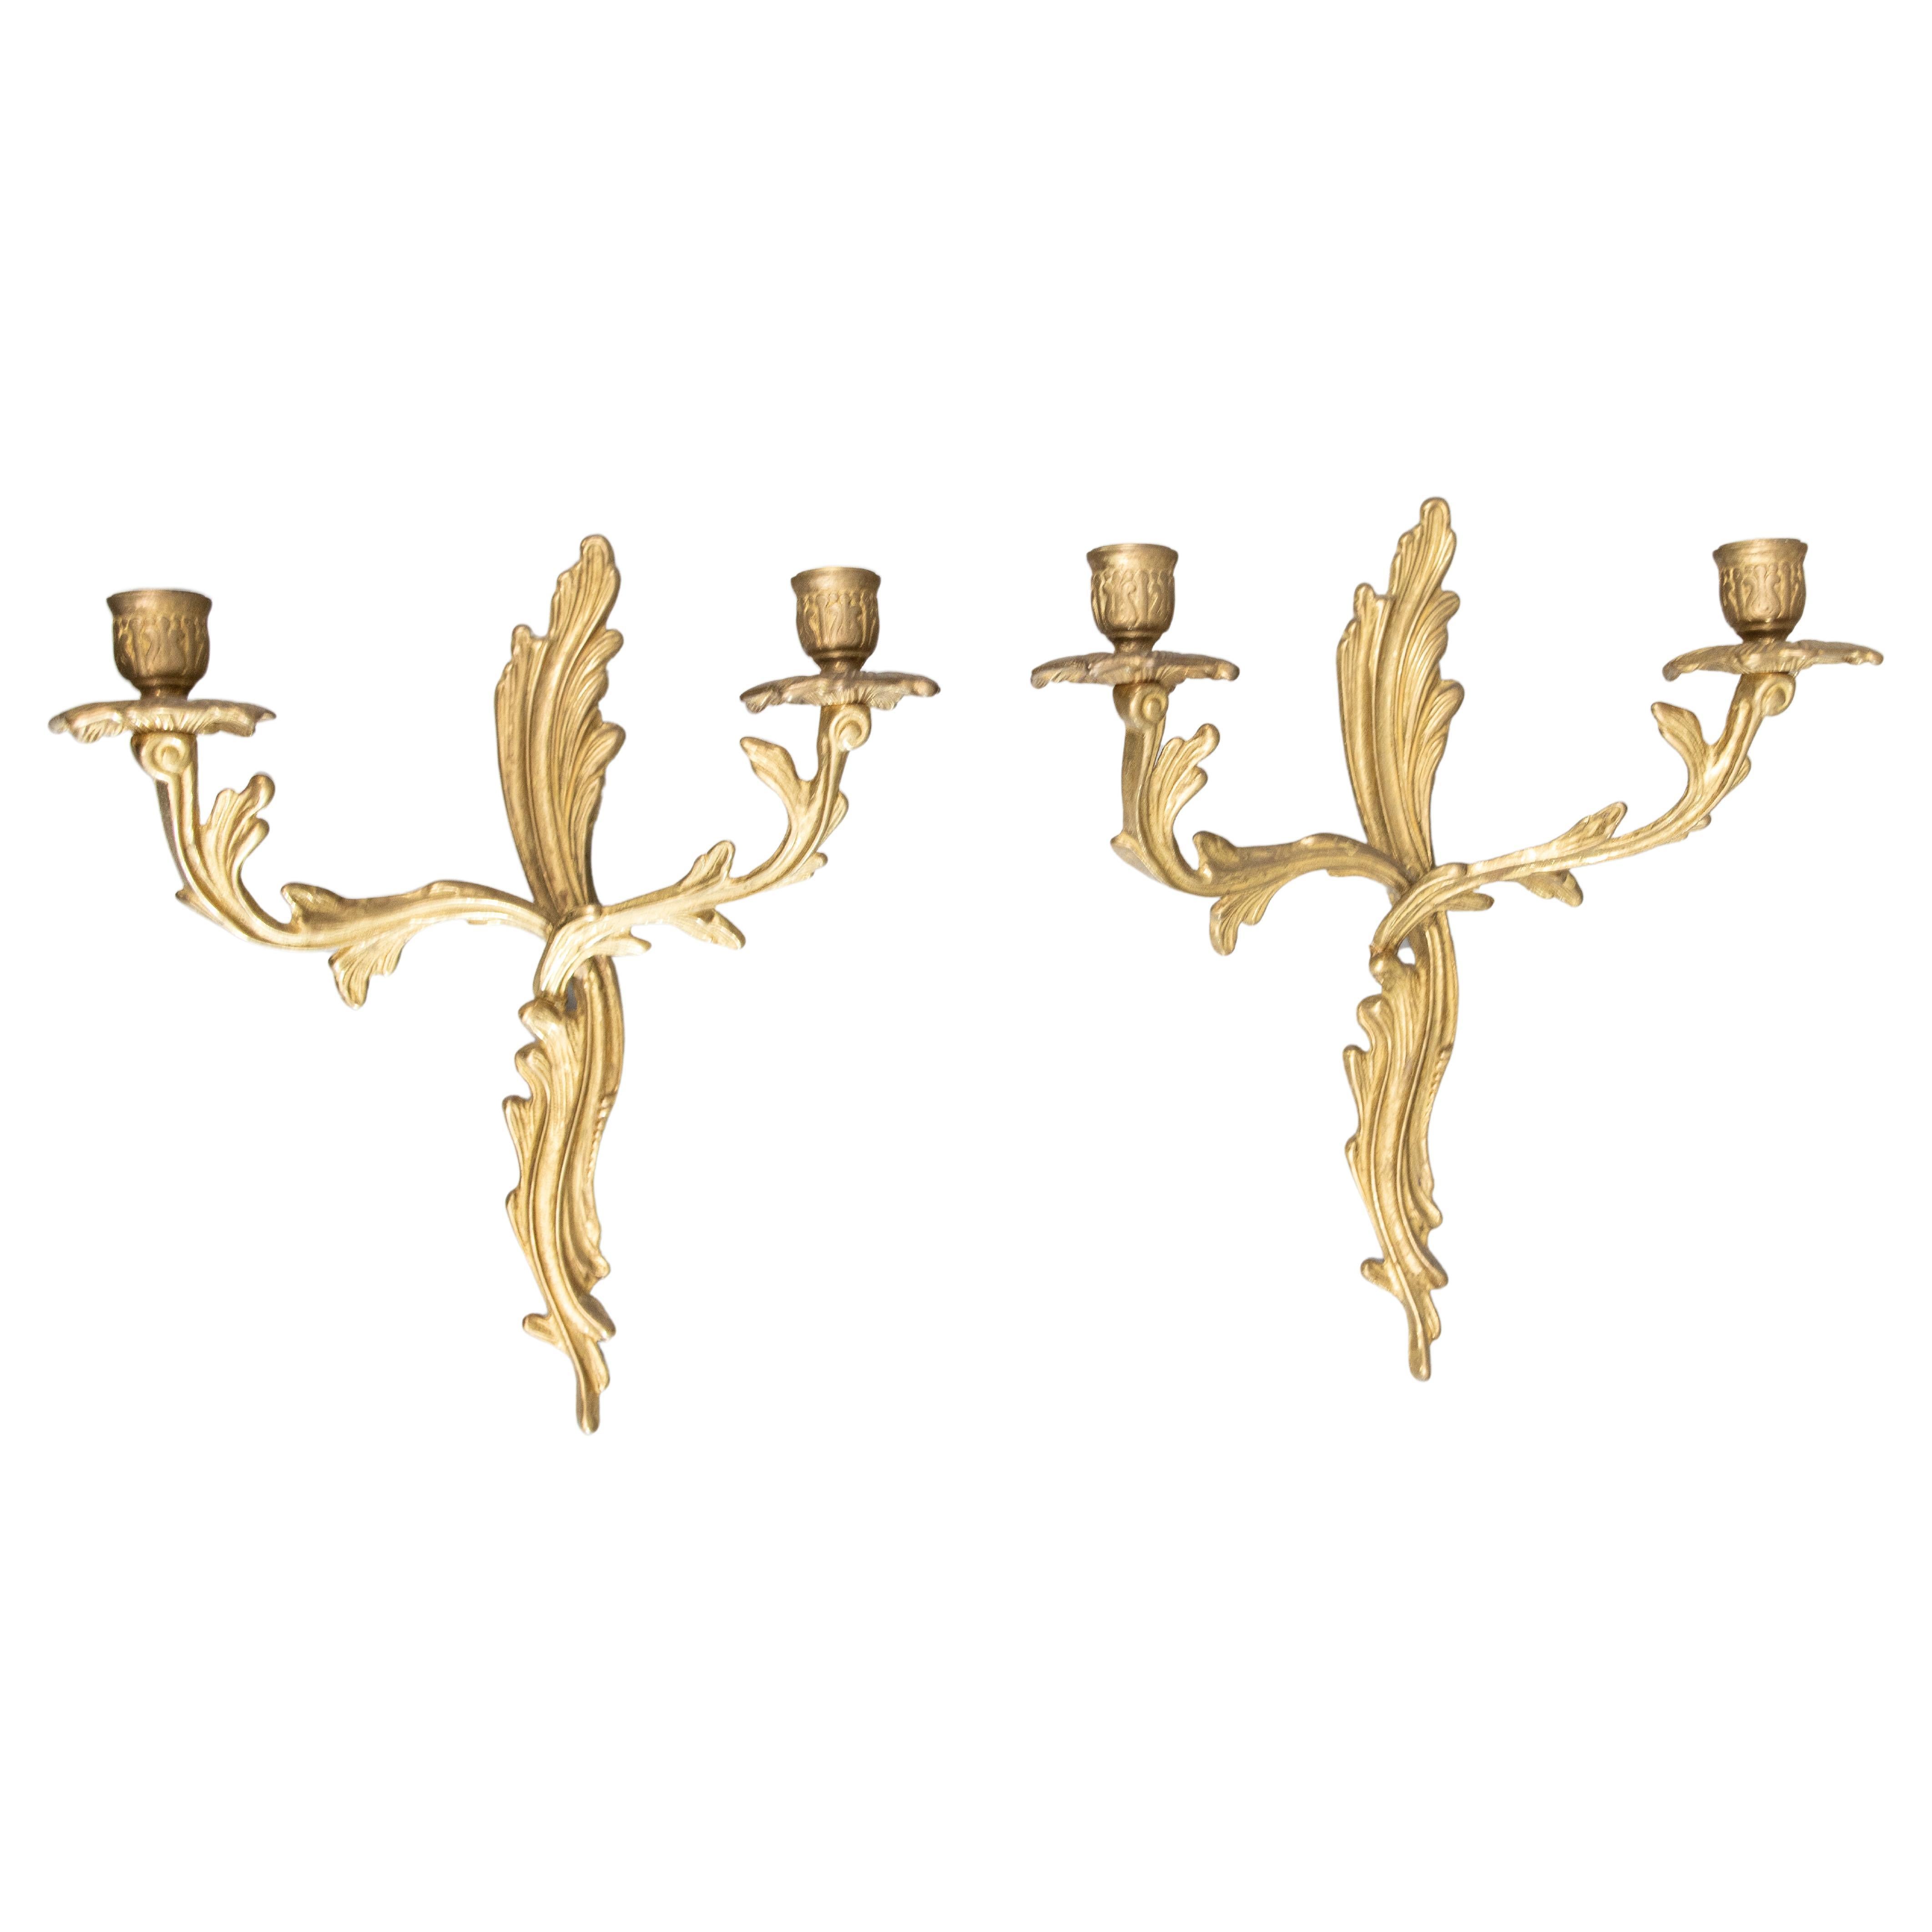 Paar antike französische Rokoko-Stil vergoldetem Messing Kandelaber Wandkerze Scones